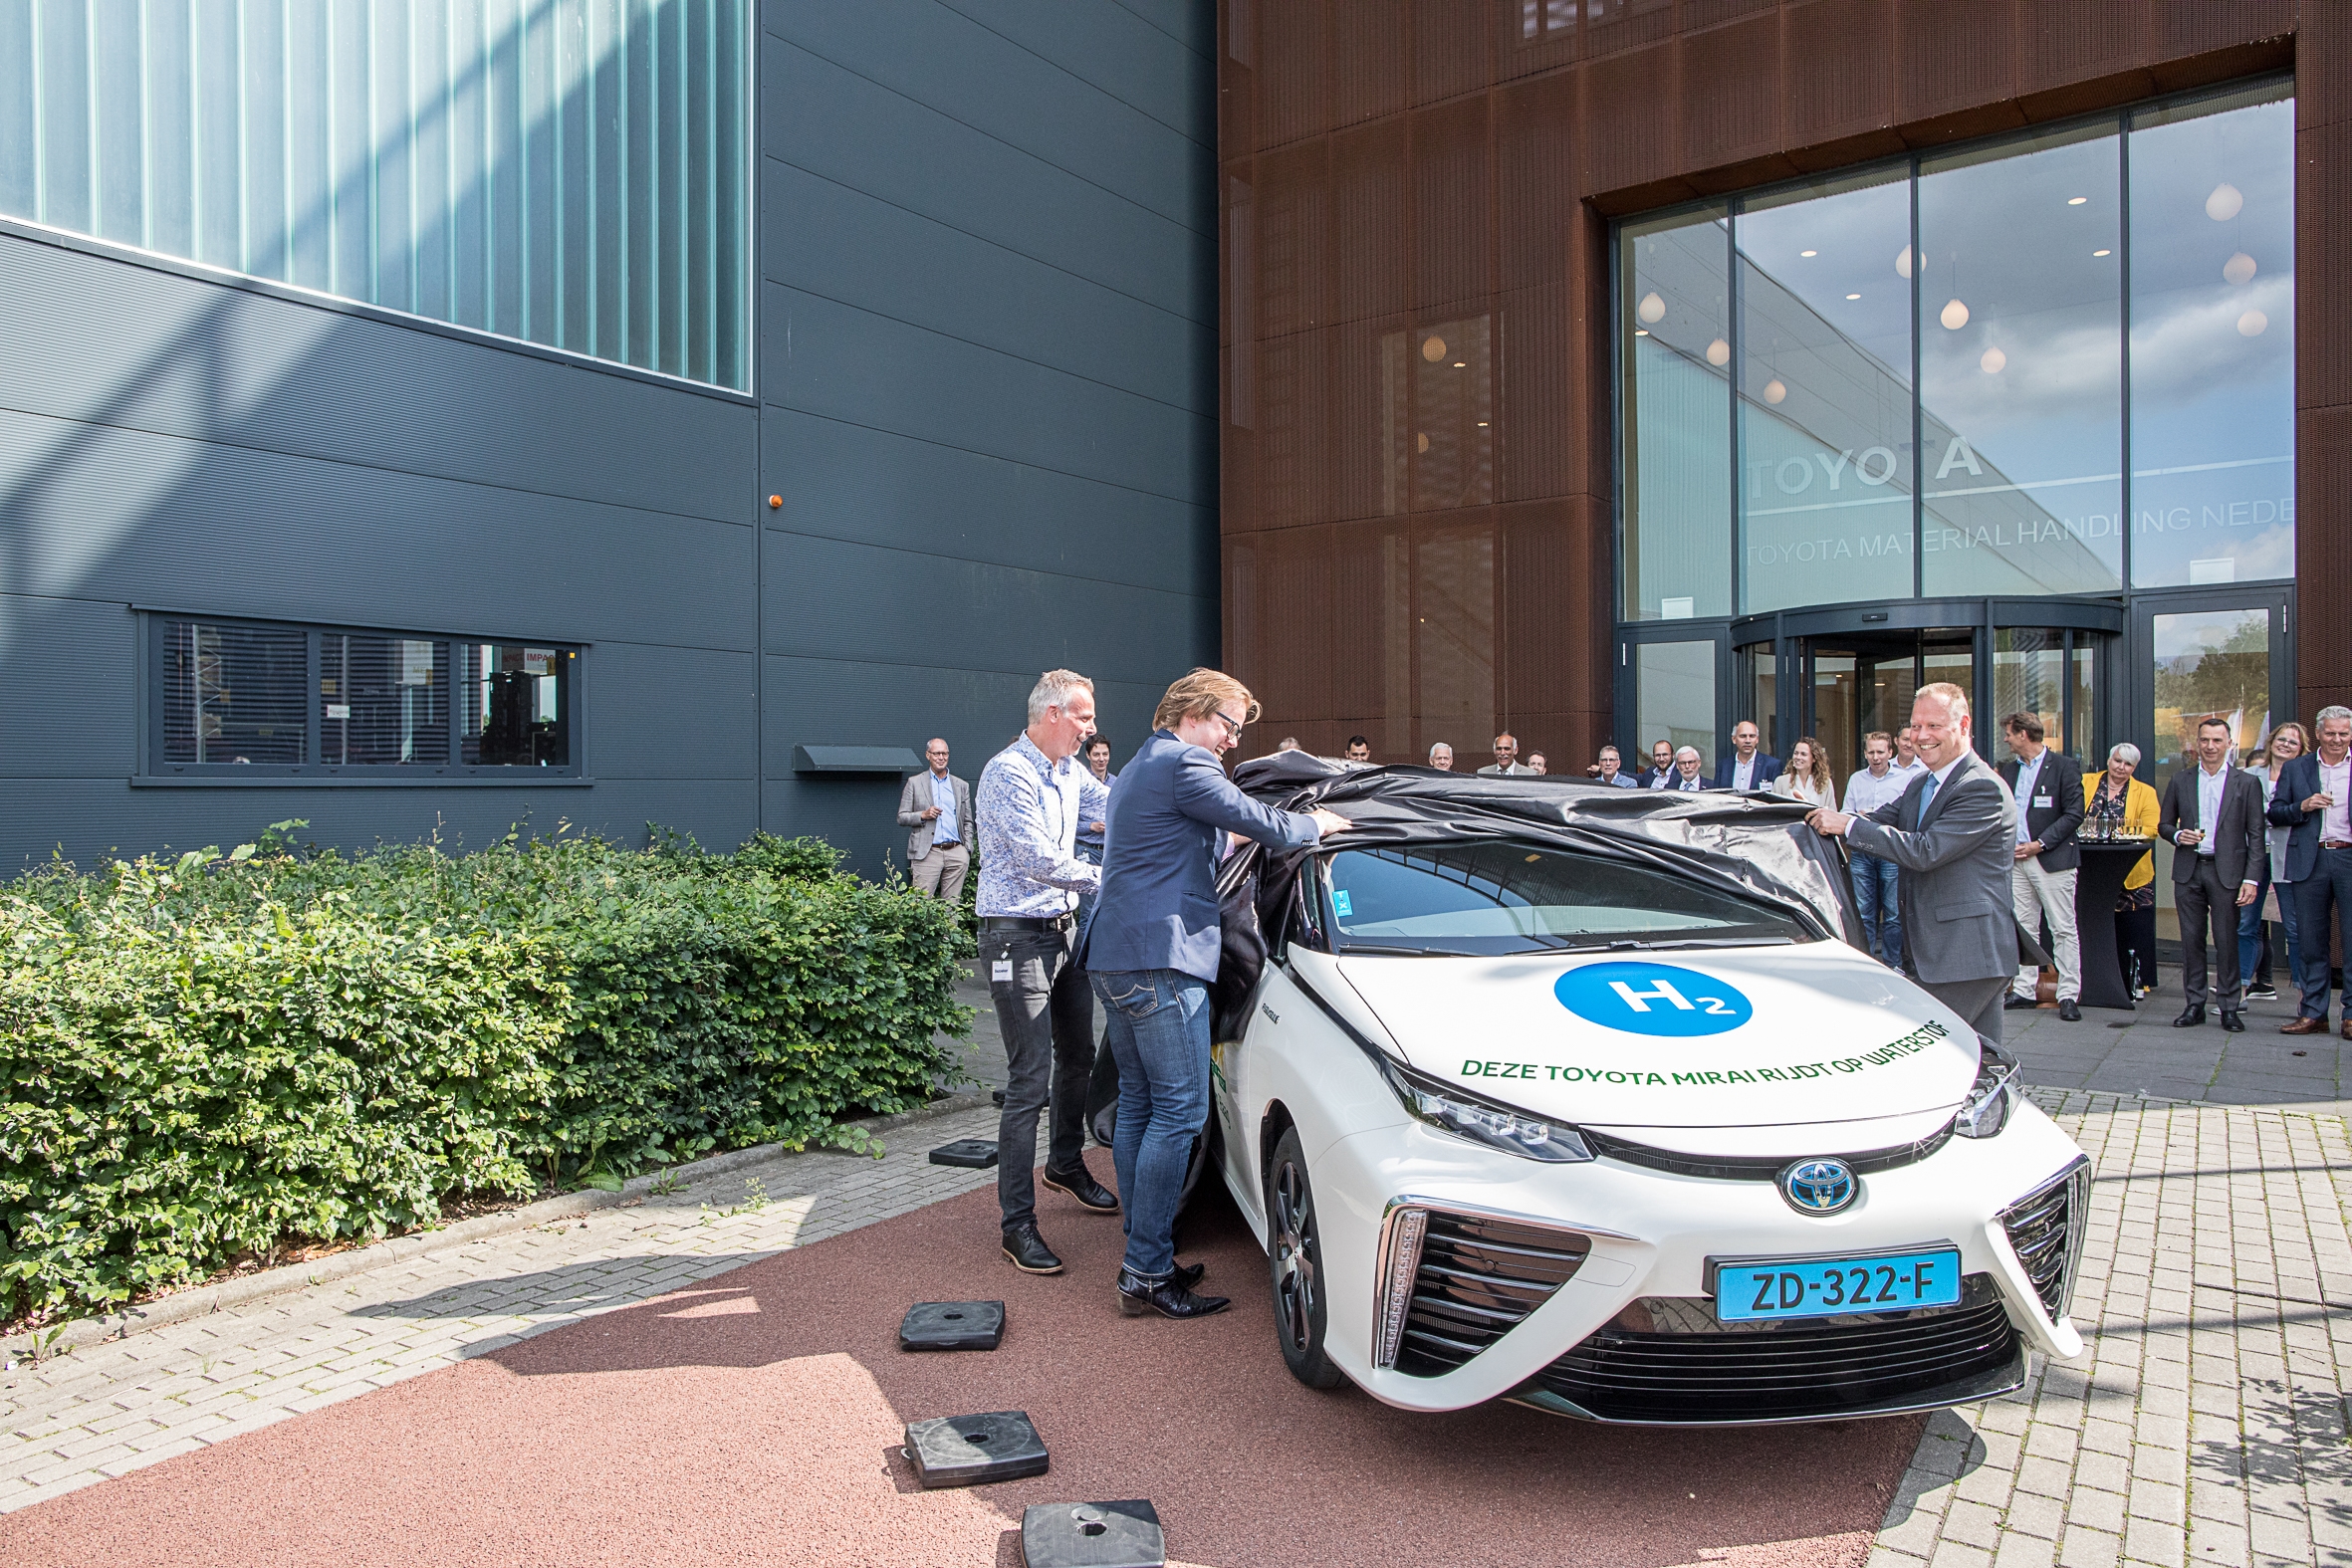 Eerste waterstof taxi vloot in Nederland met 20 keer Toyota Mirai ...